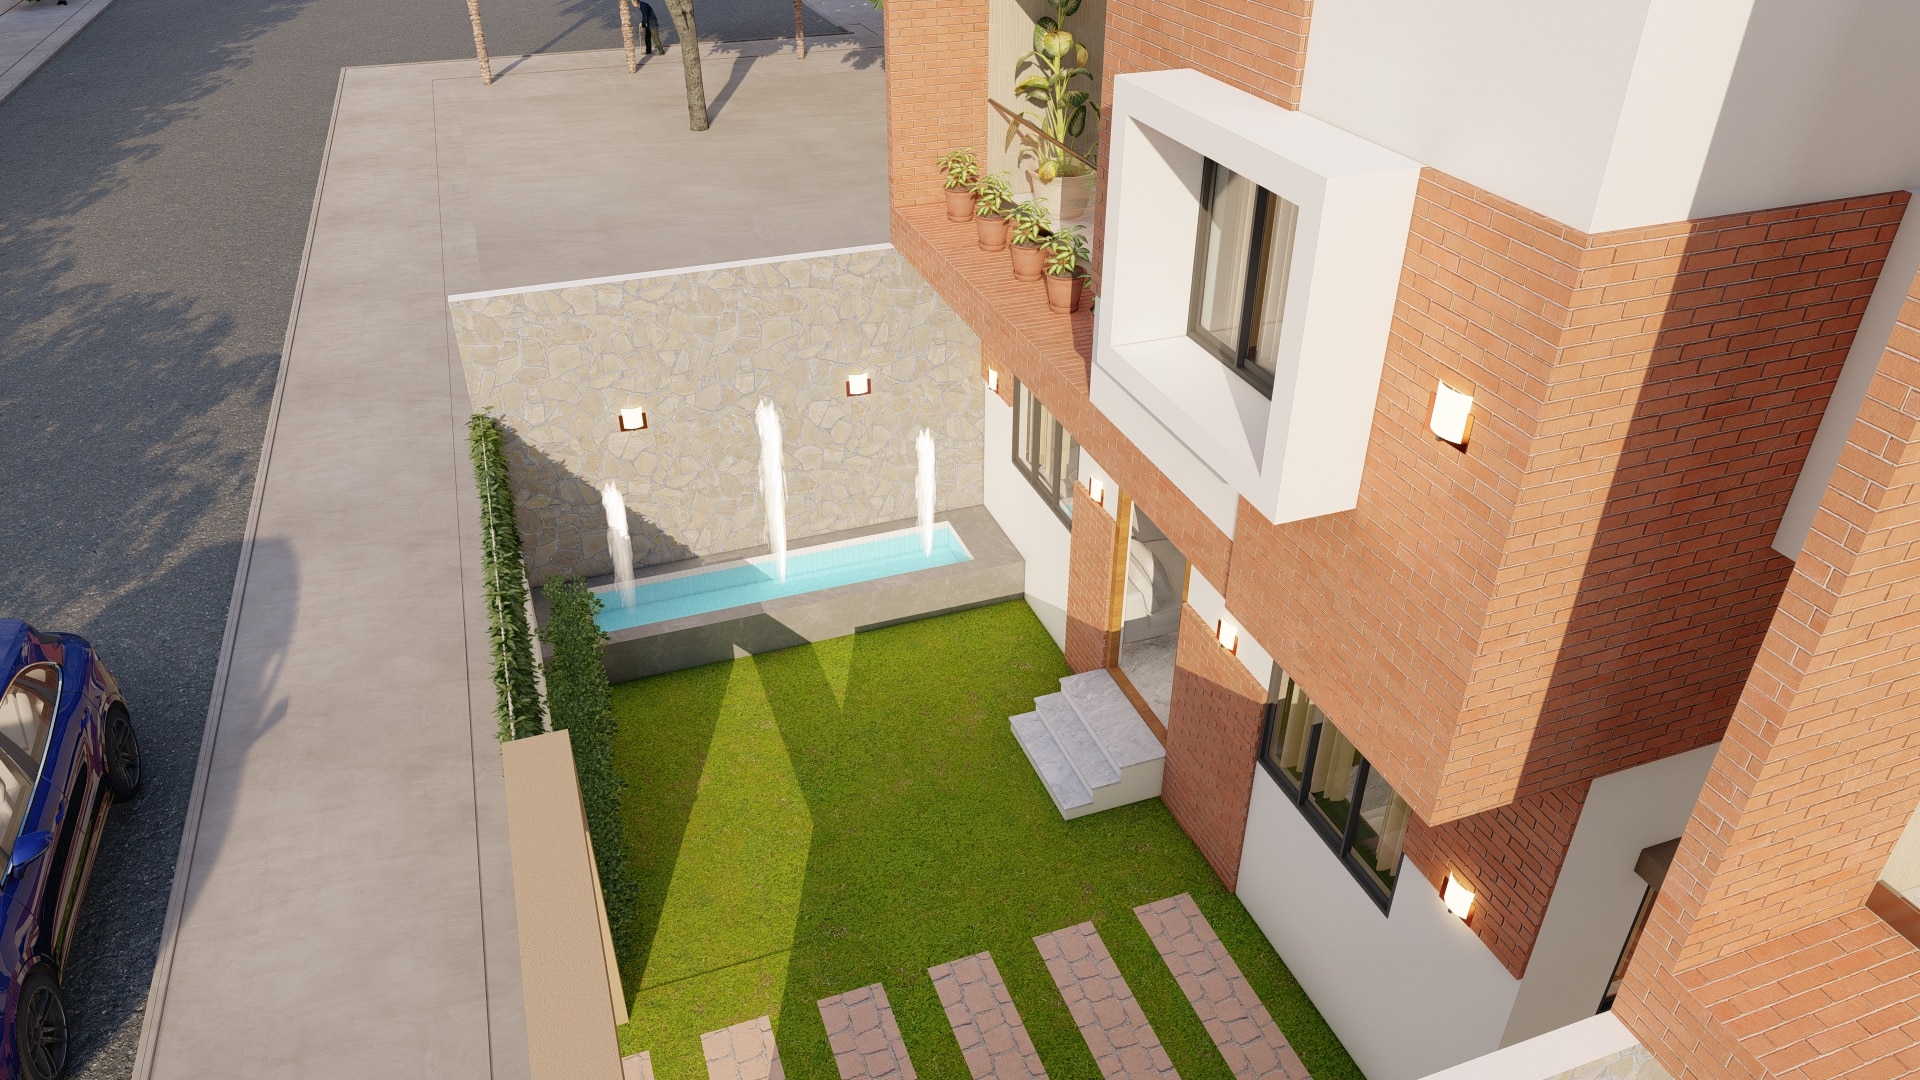 new villa construction floor plan front enterance area 30x60 west facing by urban terrace